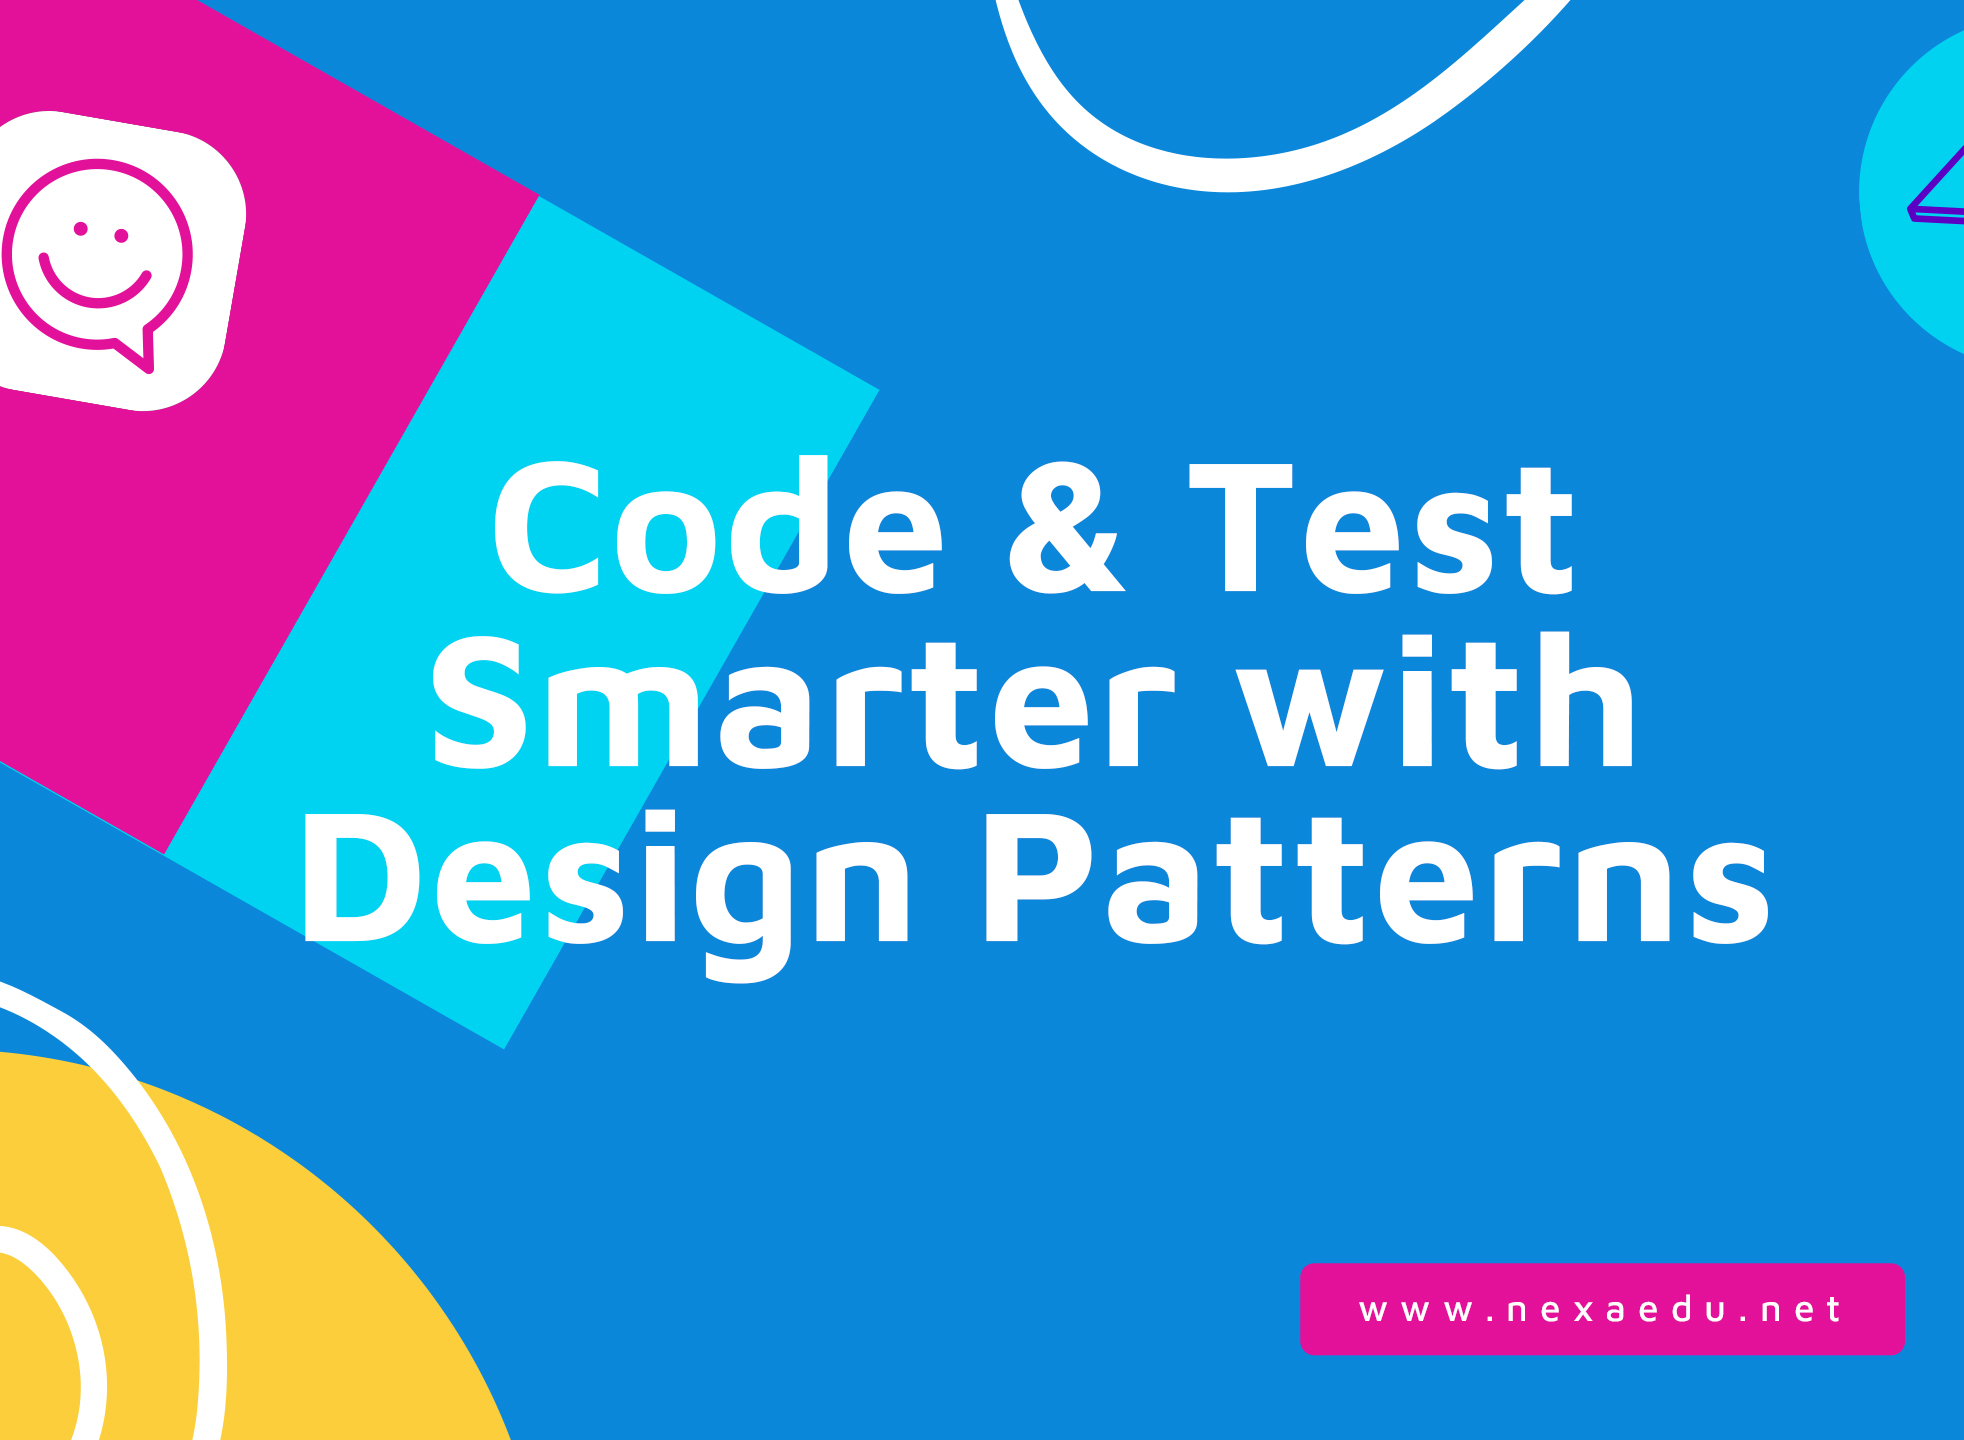 Code & Test Smarter with Design Patterns